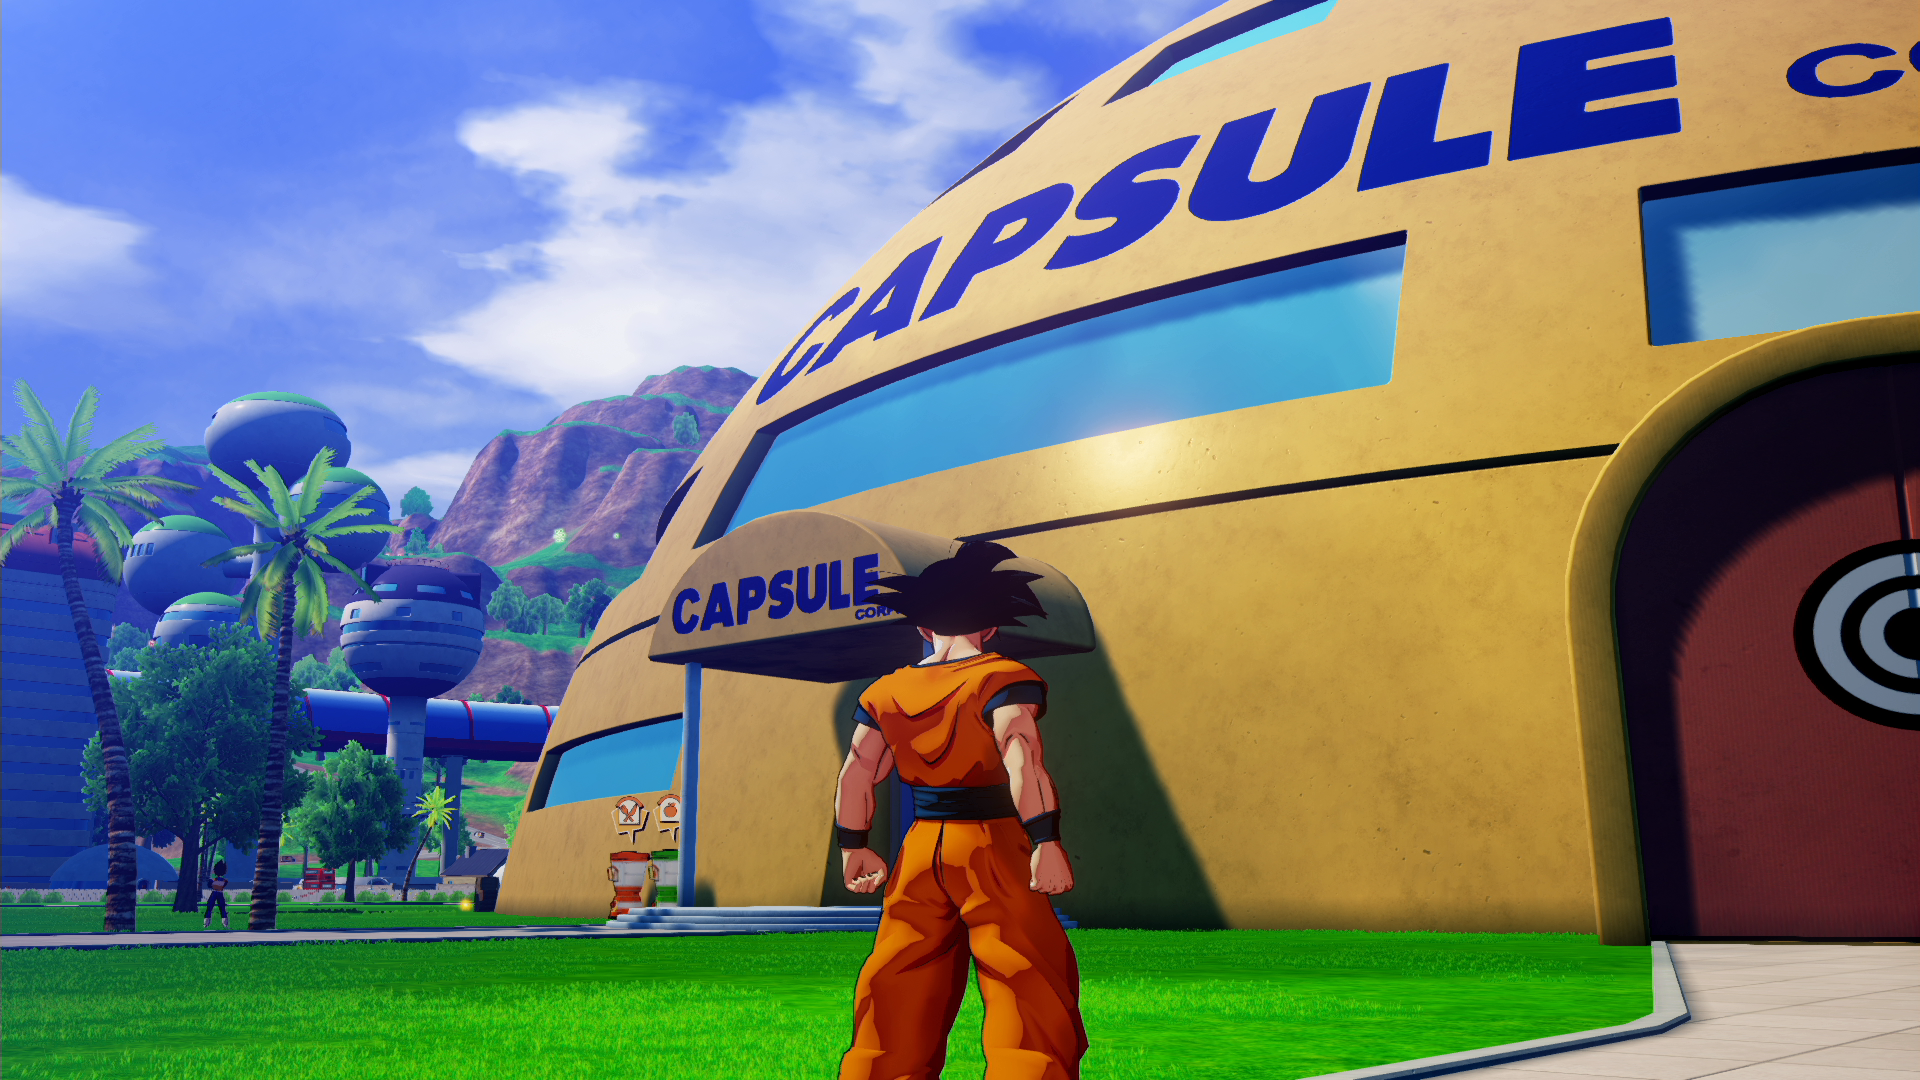 Goku (Masako Nozawa) pays a visit to the Capsule Corp HQ in Dragon Ball Z: Kakarot (2020), Bandai Namco